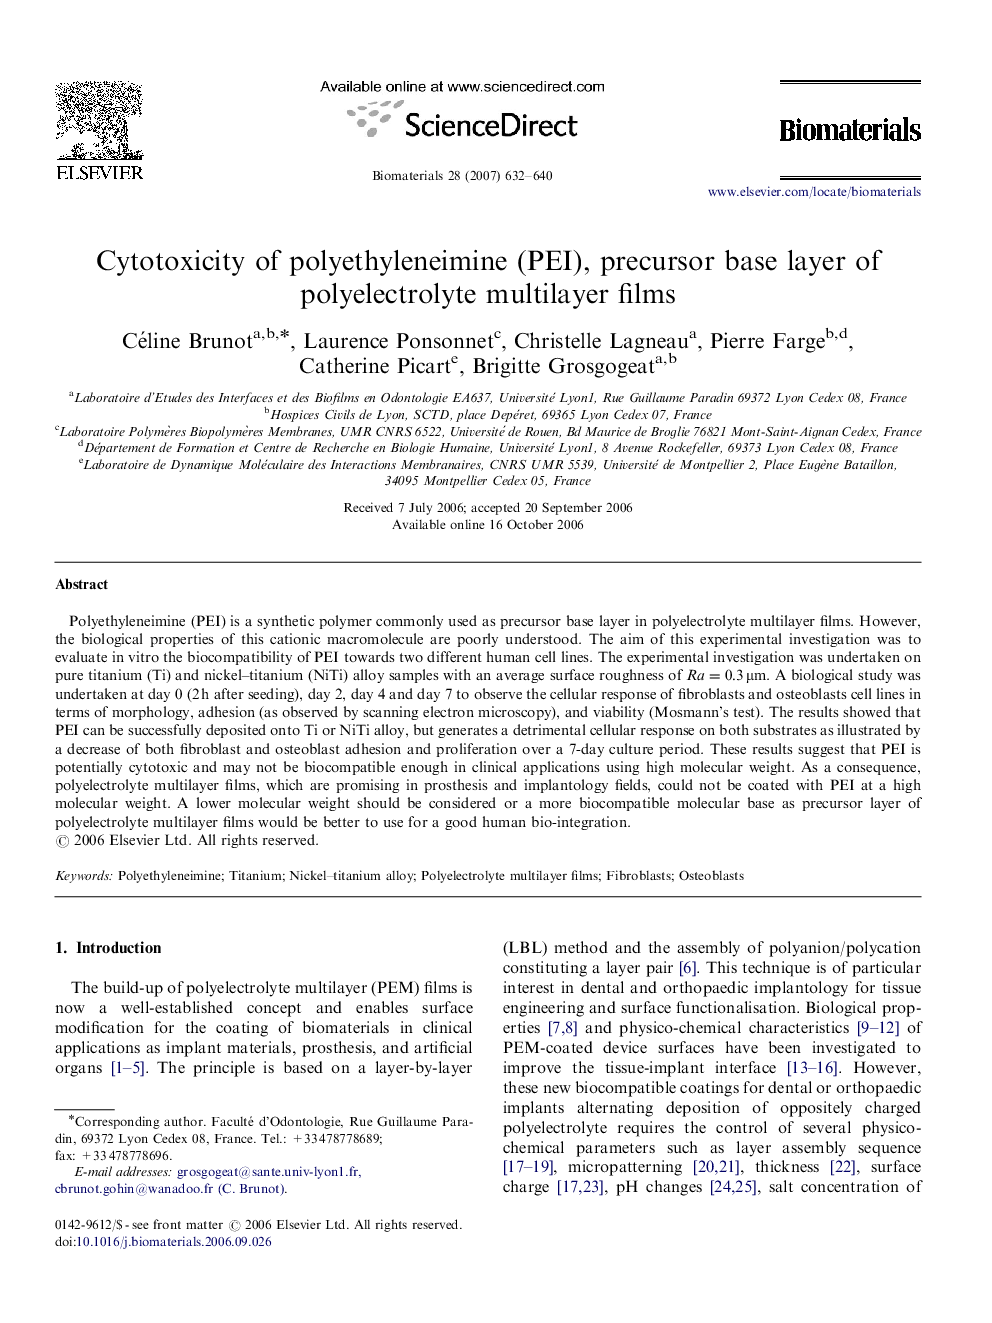 Cytotoxicity of polyethyleneimine (PEI), precursor base layer of polyelectrolyte multilayer films